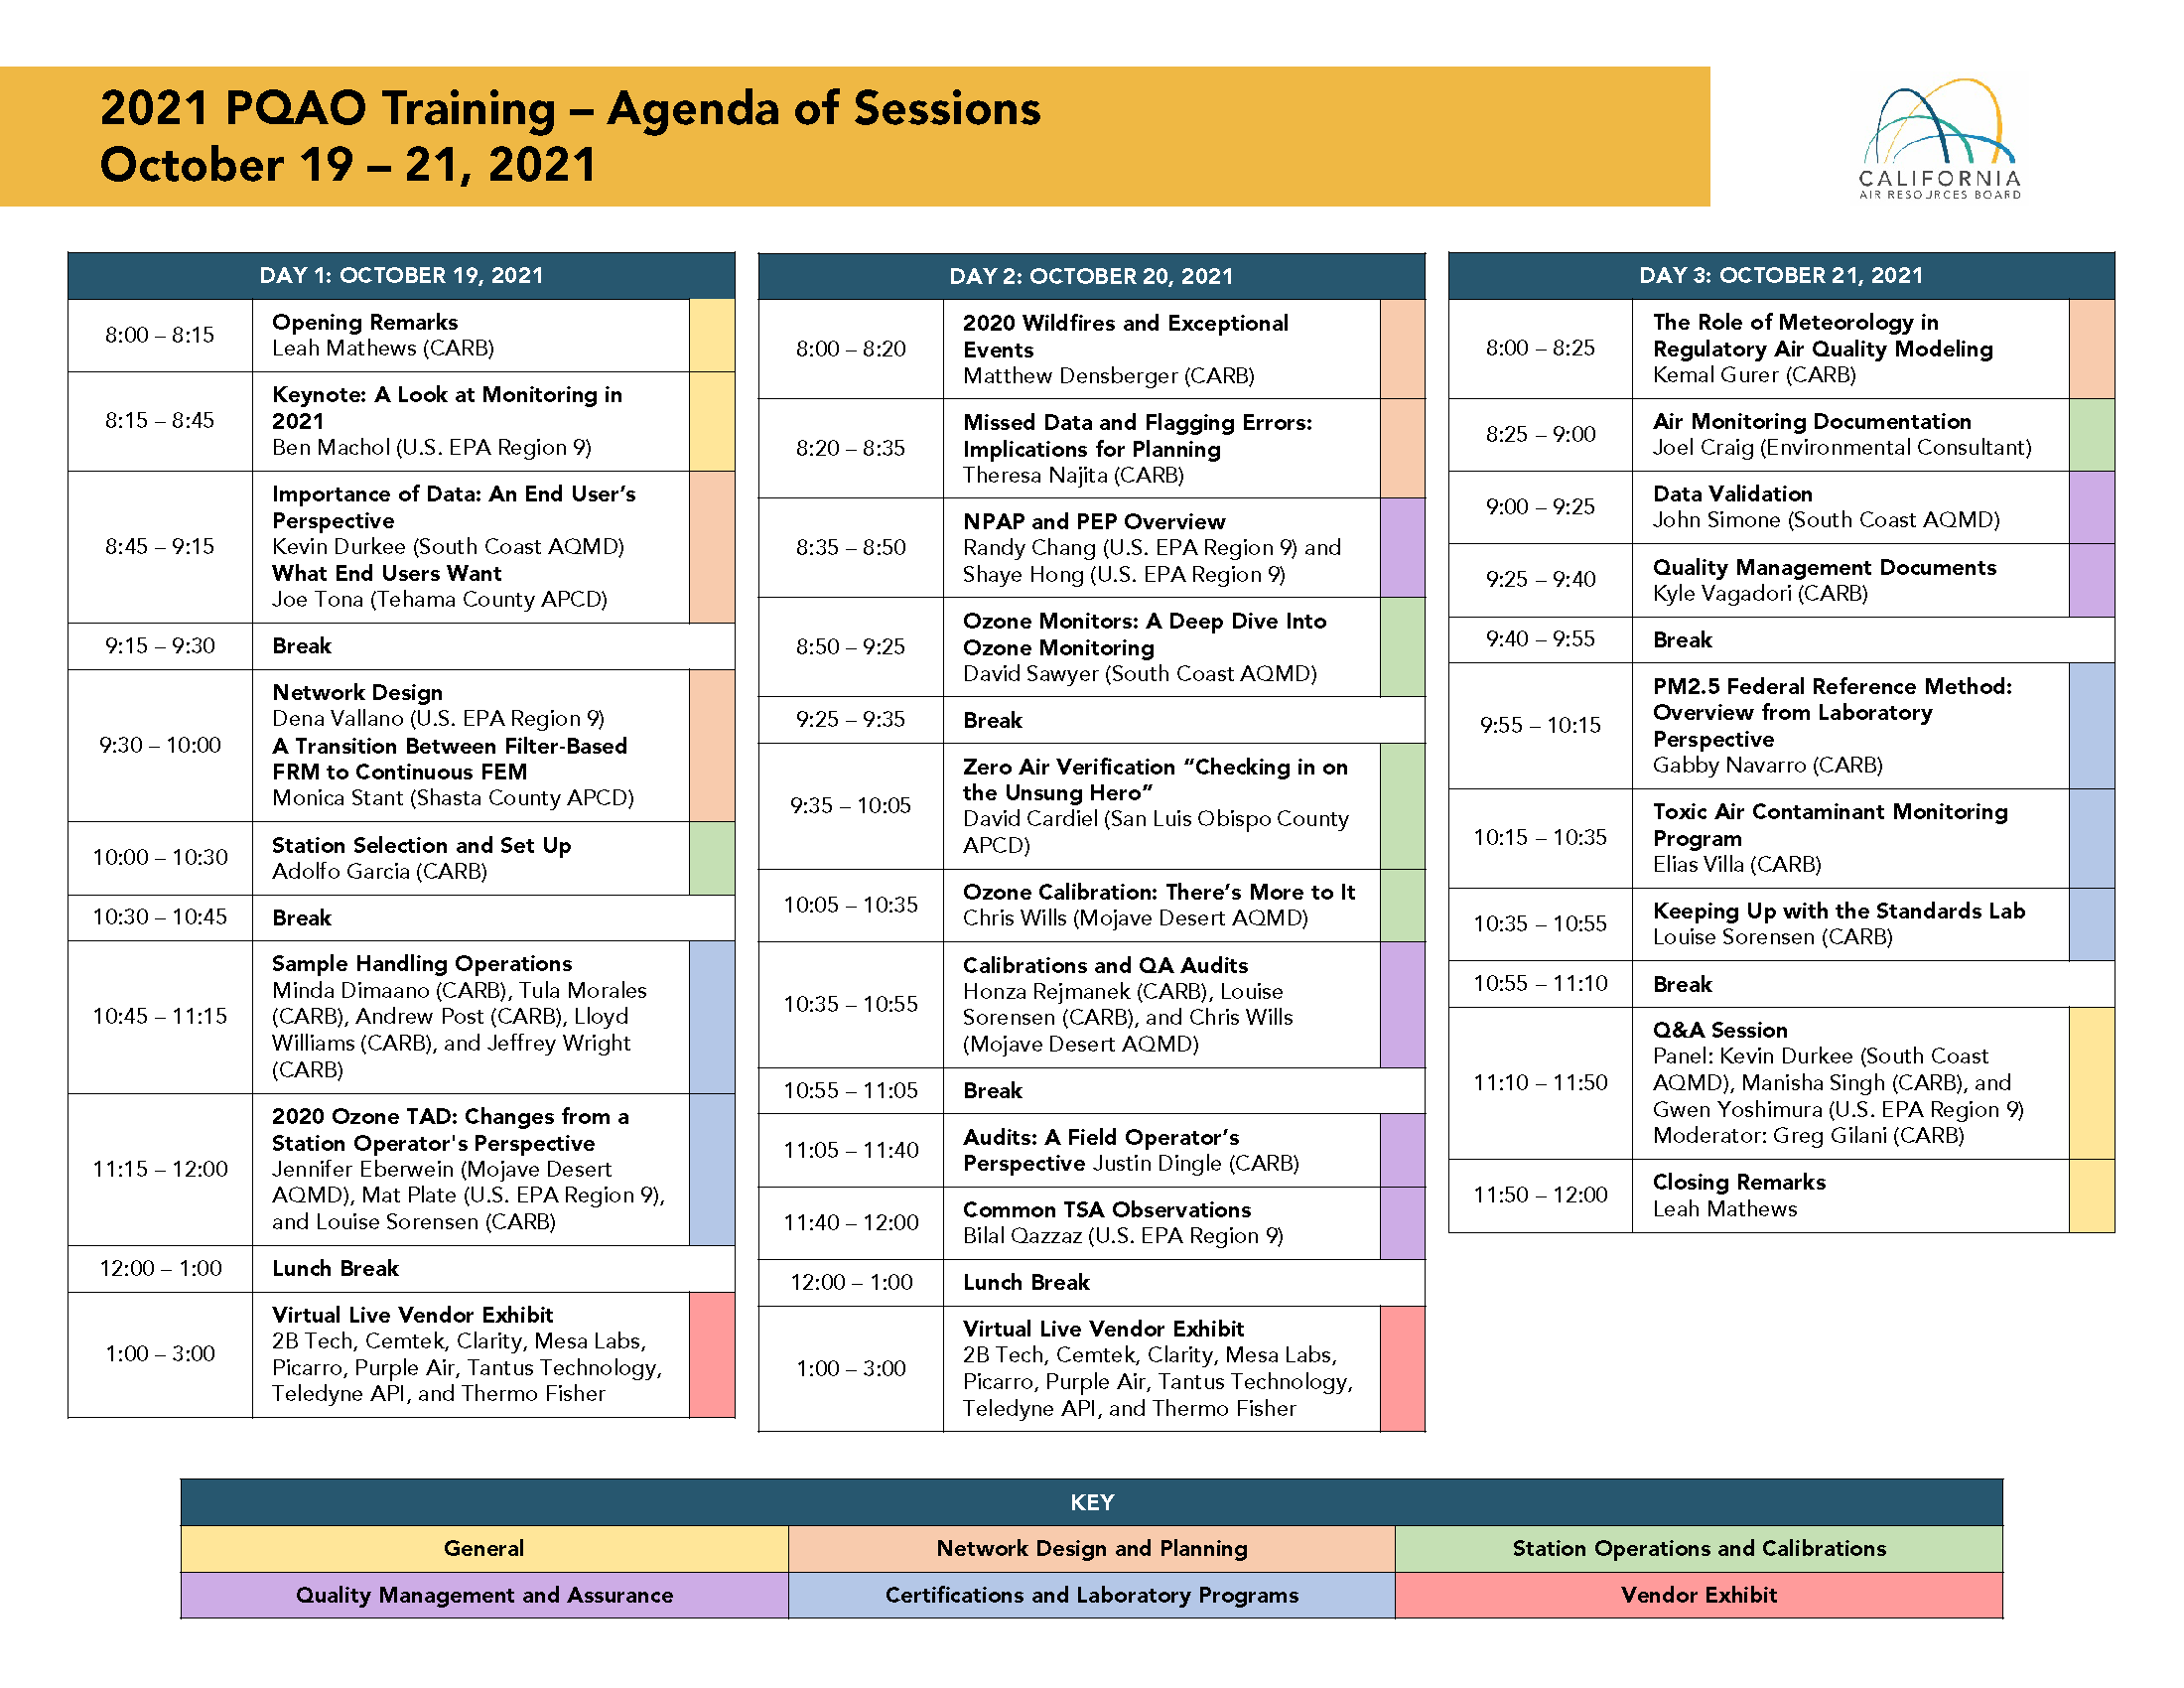 2021 PQAO Training Agenda 10.13.21.png